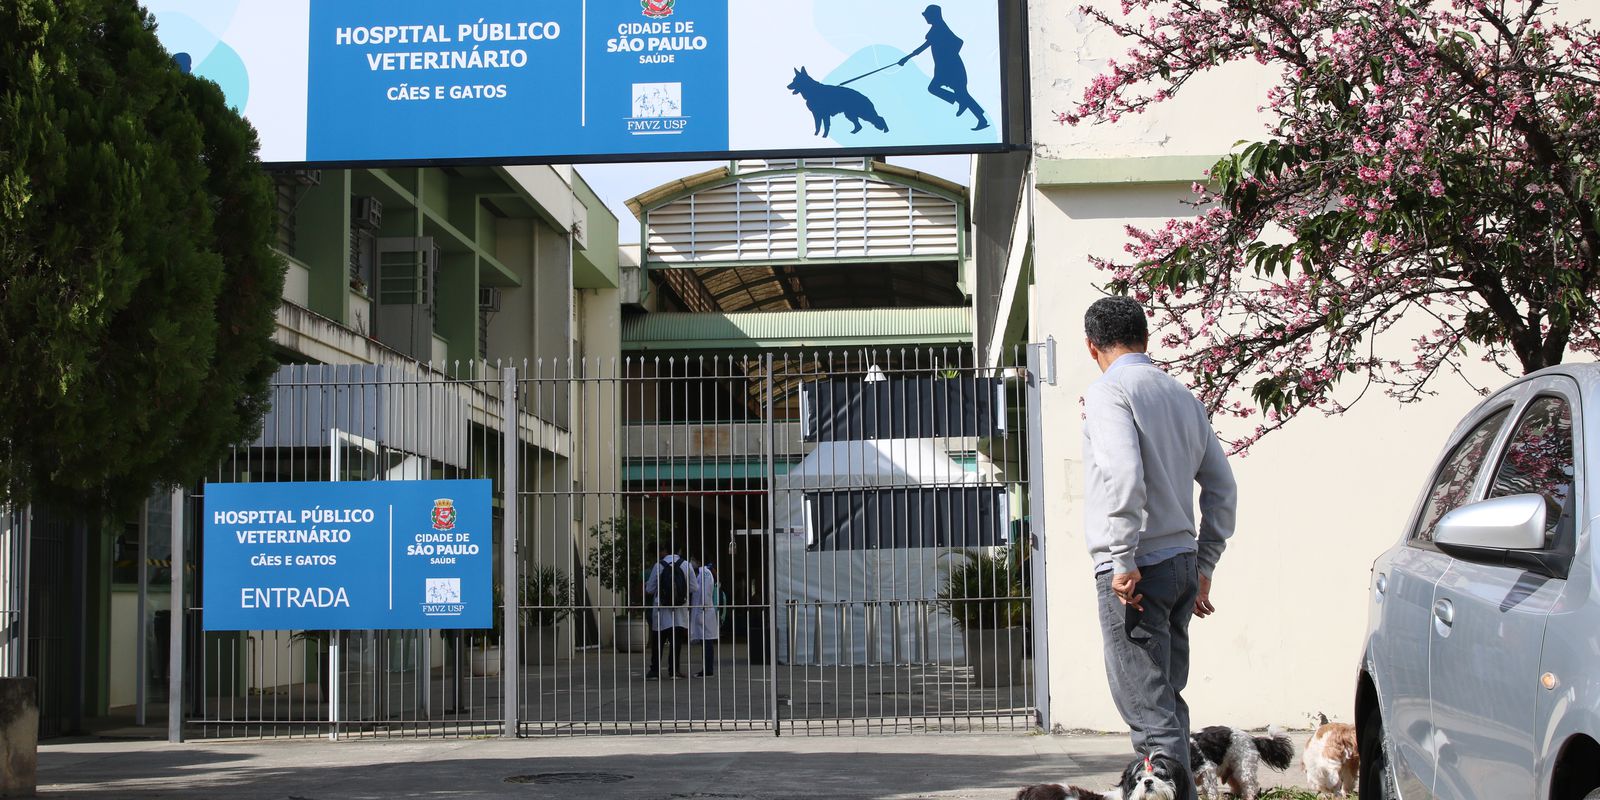 São Paulo opens new public veterinary hospital unit